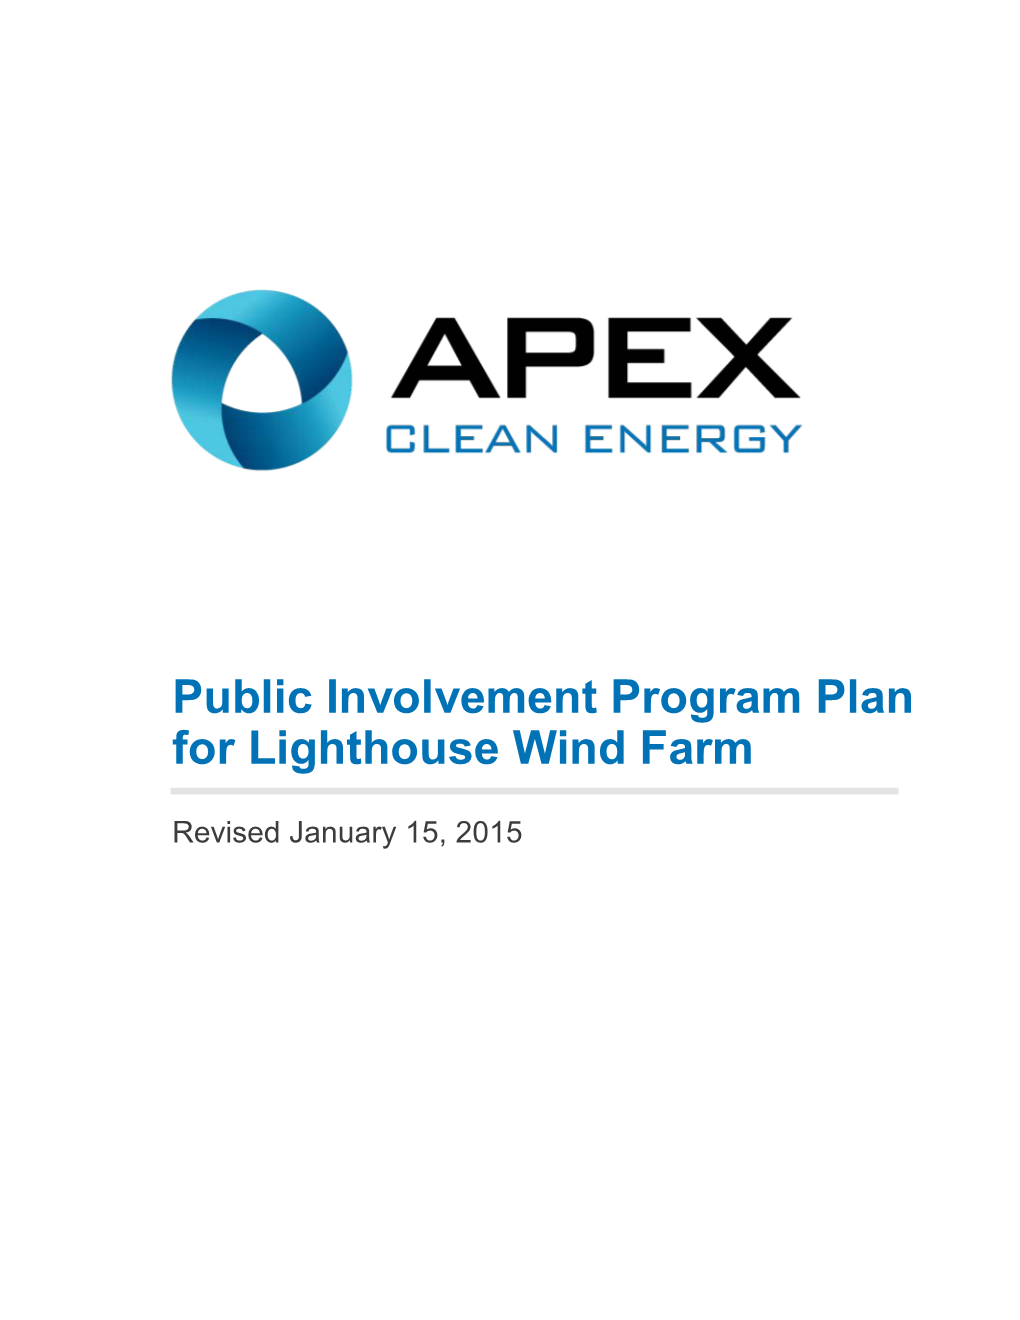 Public Involvement Program Plan for Lighthouse Wind Farm